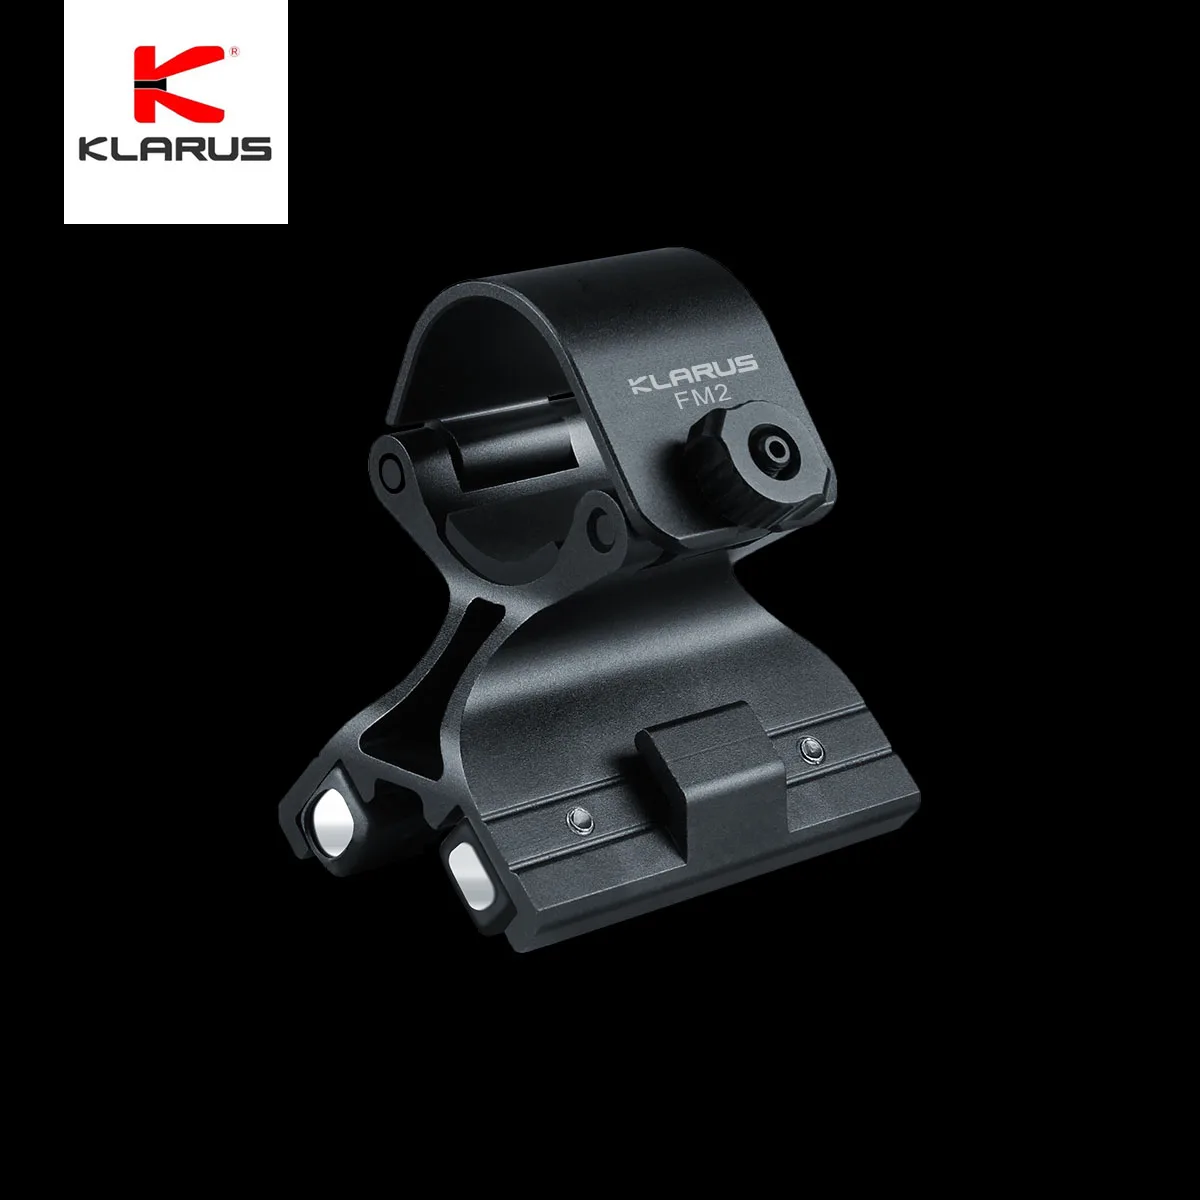 Klarus Original Multi-function Magnetic Gun Mount FM2, Tactical Flashlight Bracket, Firm/Stable for Night Vision Hunting Gun